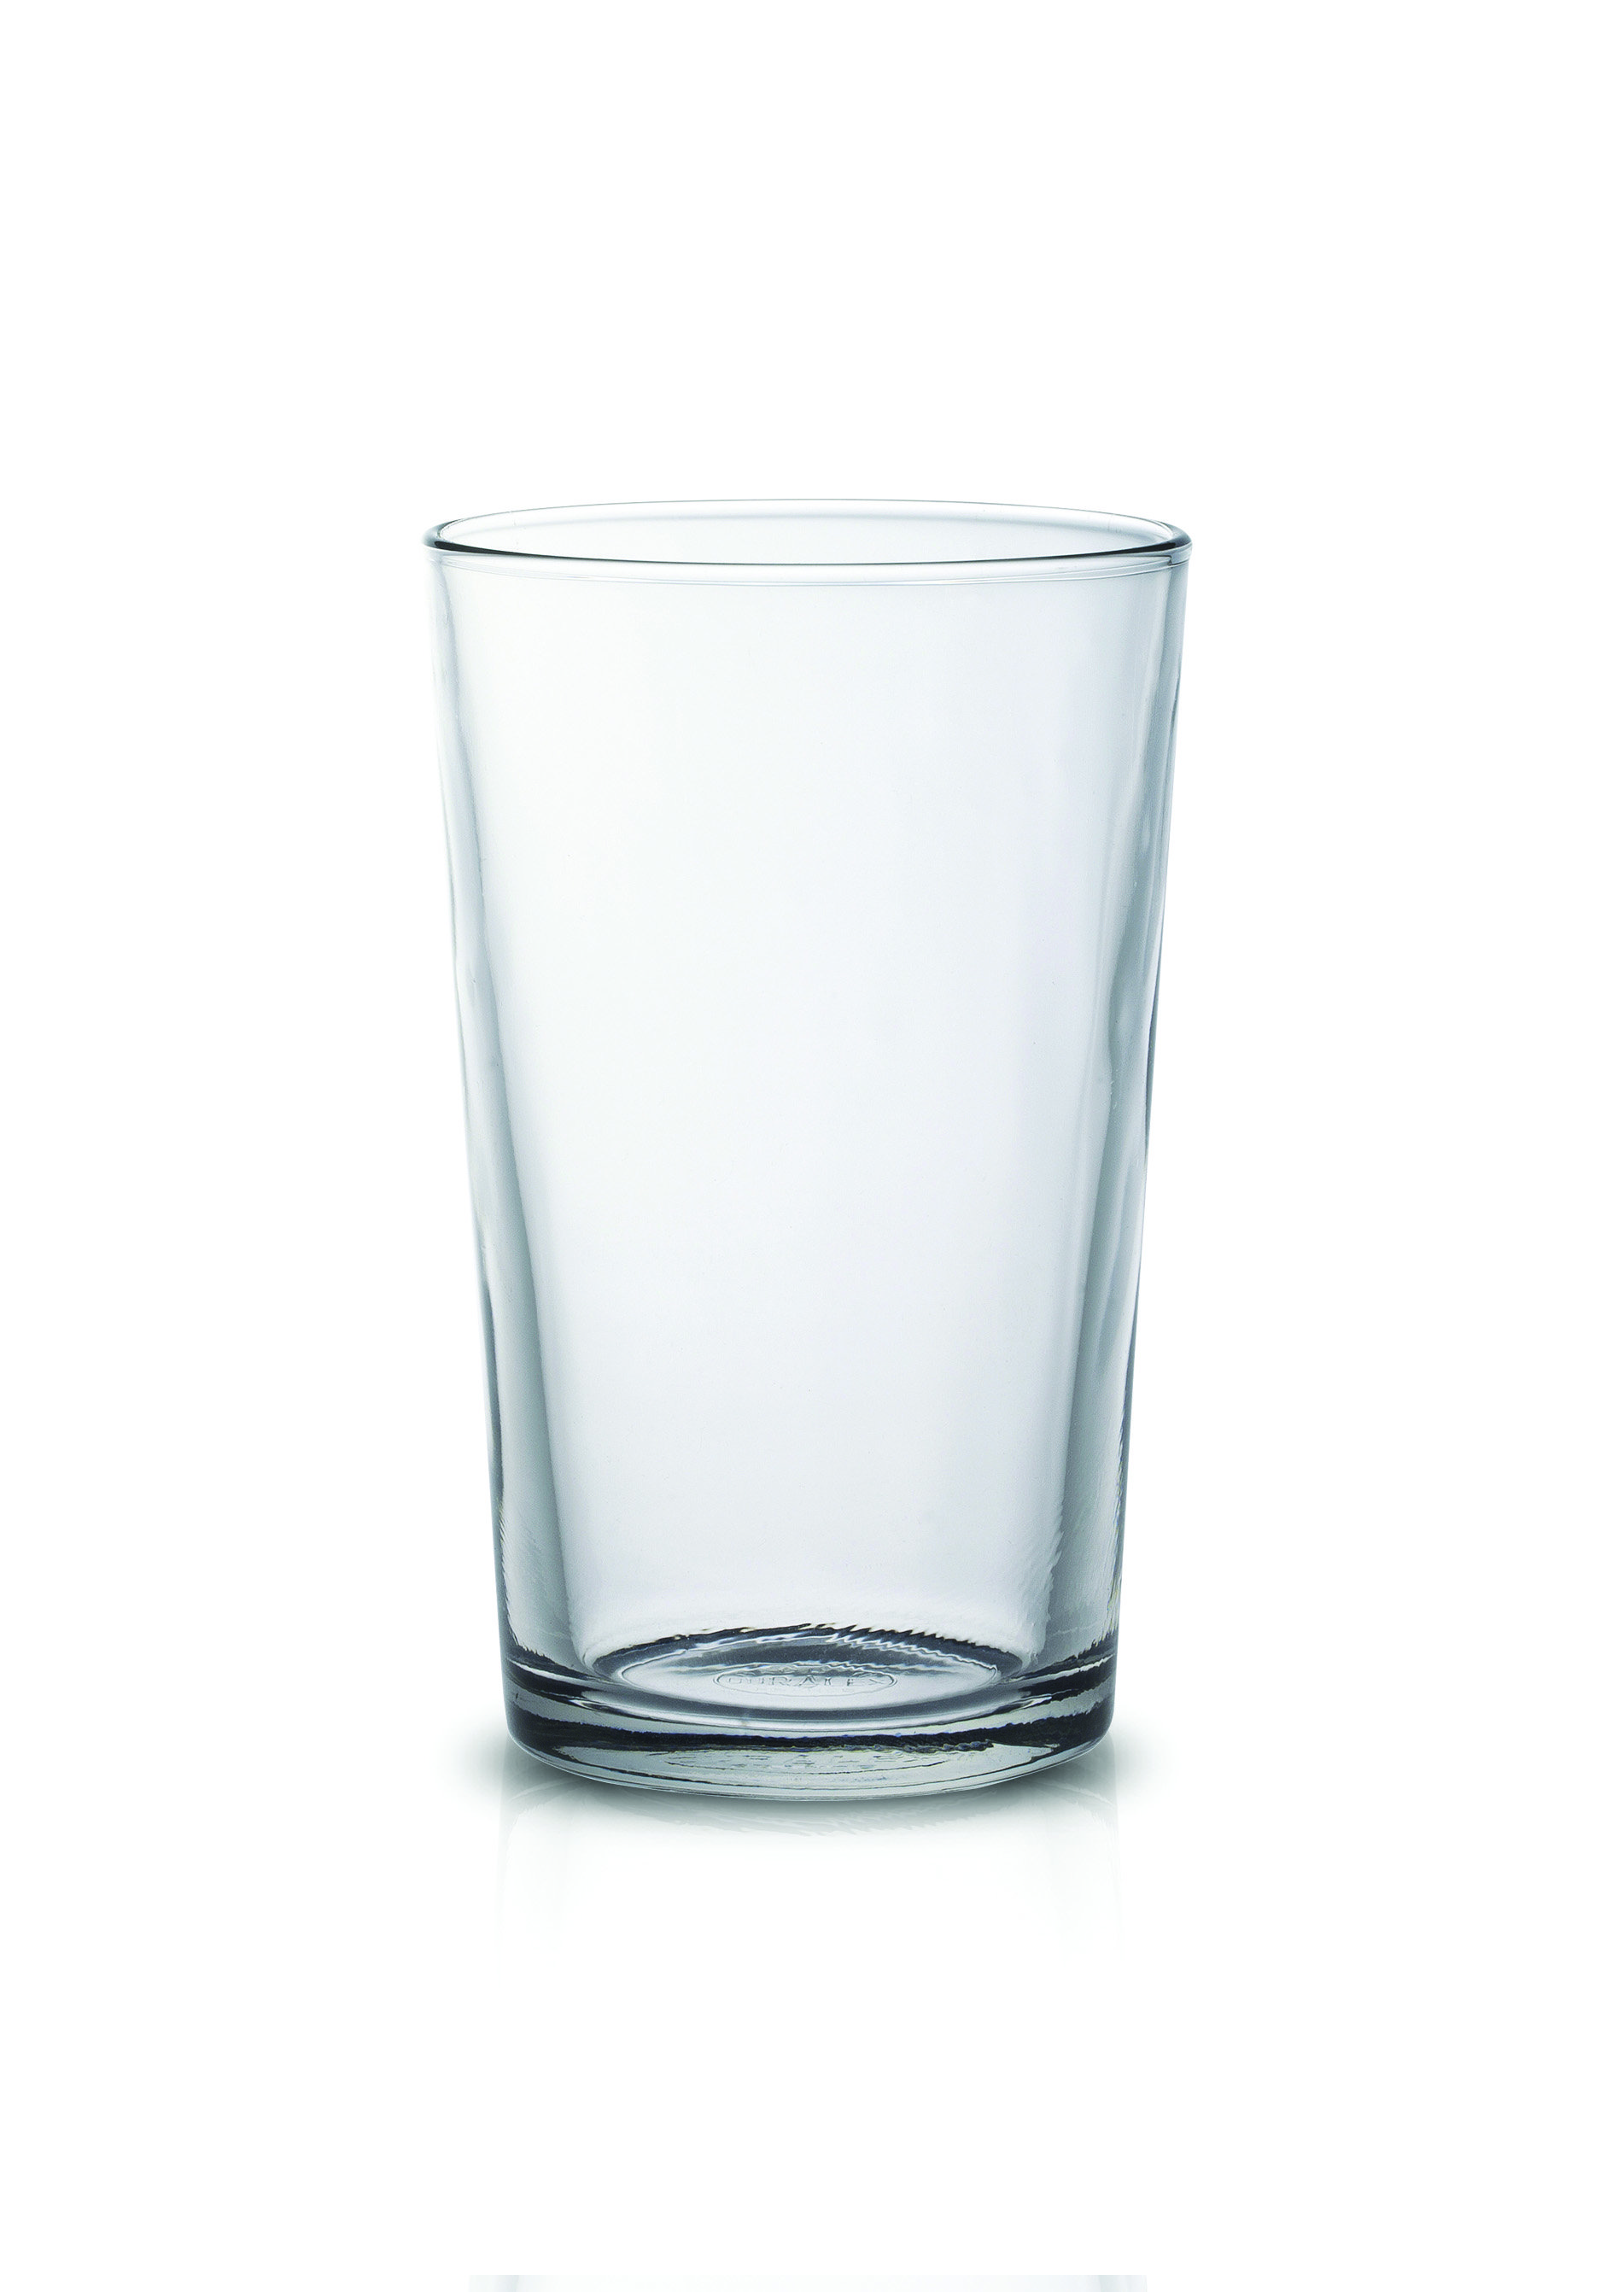 Wayfair, Drinking Glasses Modern Drinkware, Up to 65% Off Until 11/20